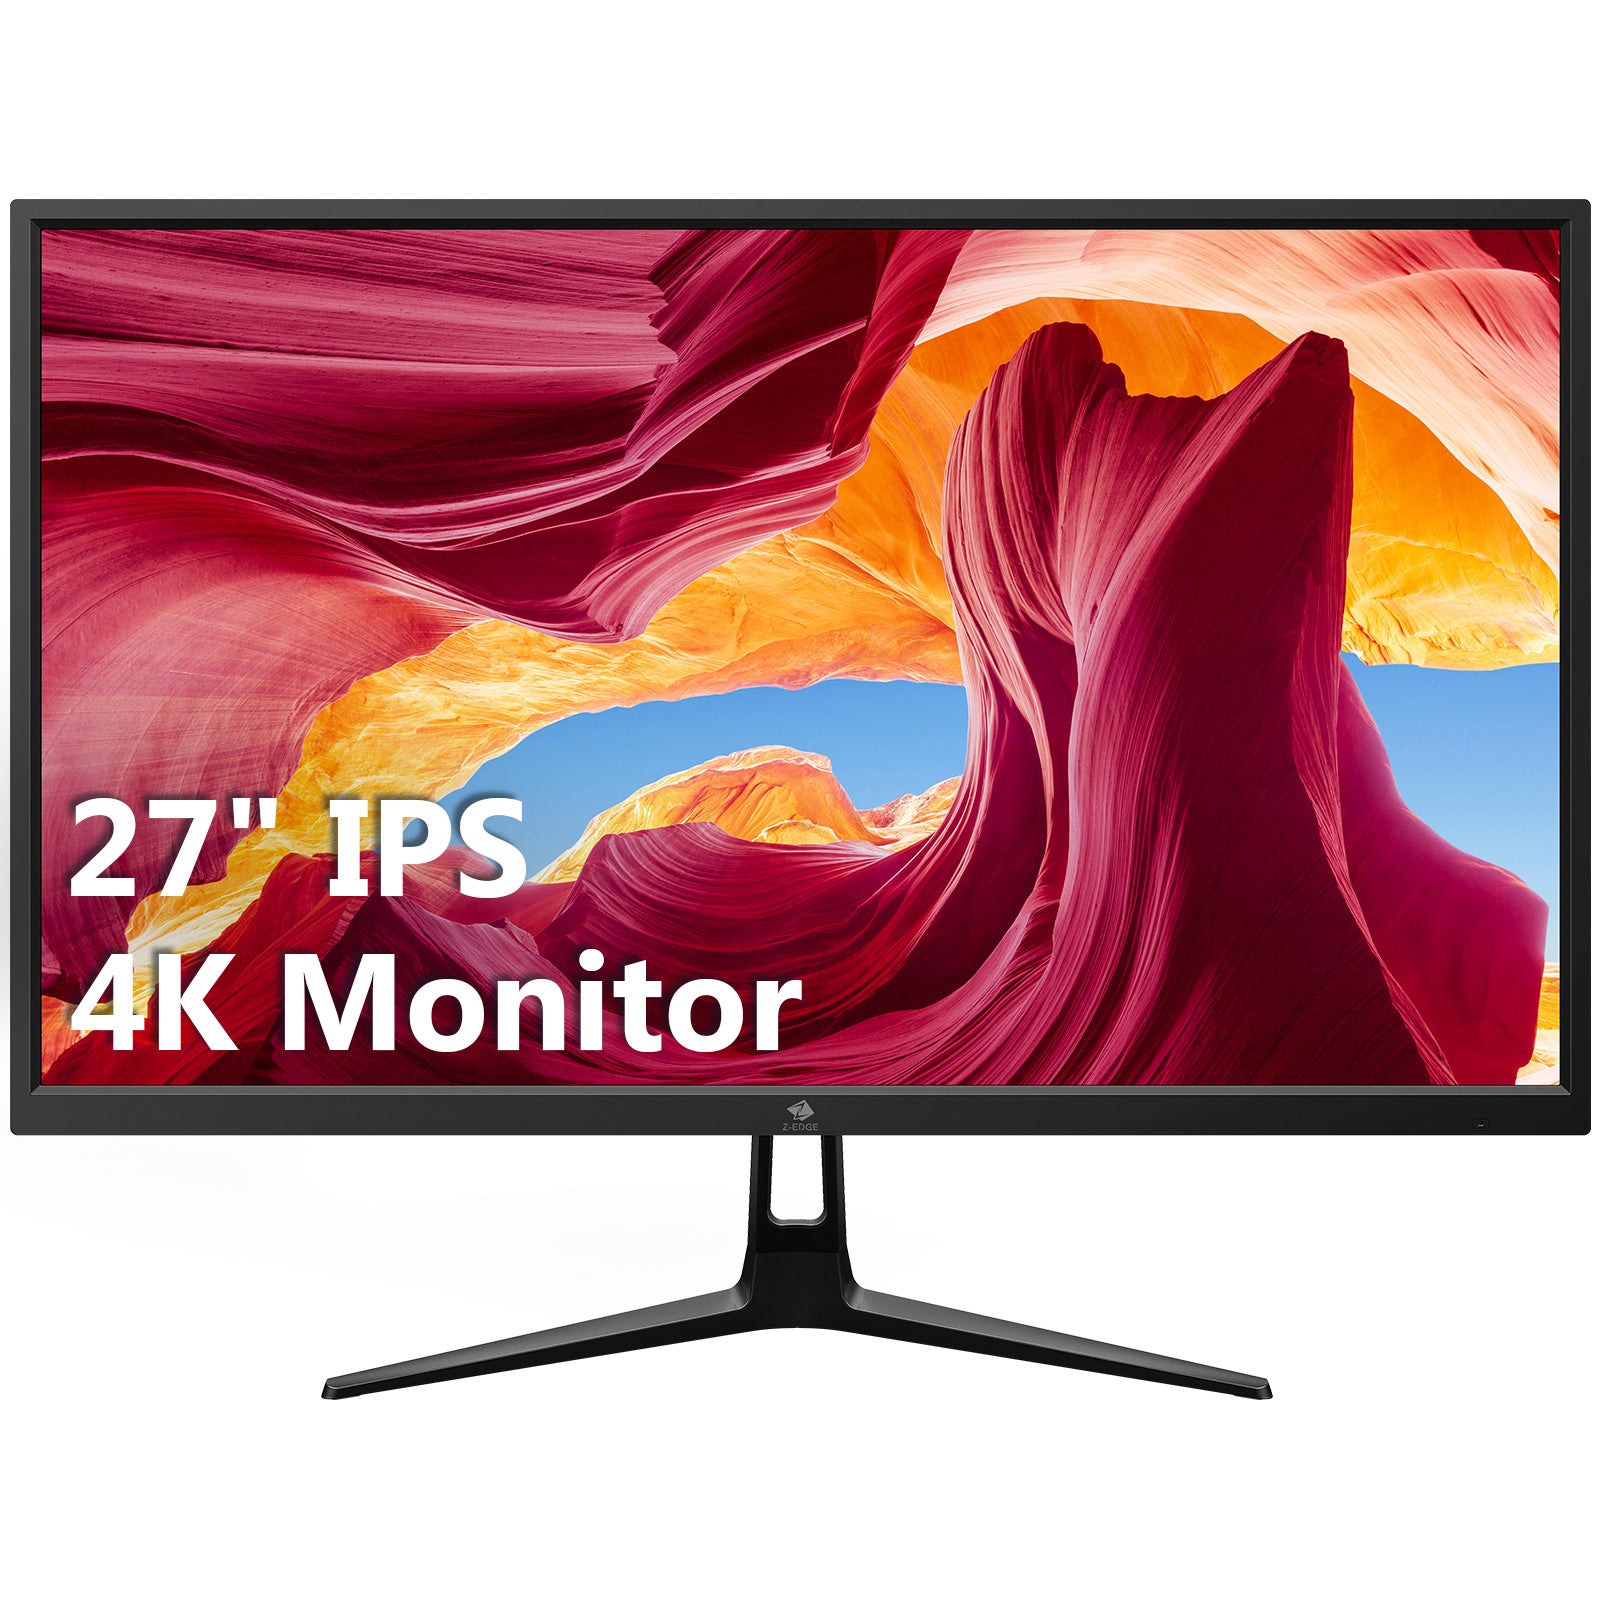 Z-EDGE U27P4K 27" 4K Monitor Panel UHD 3840x2160 60Hz Eye-Care Tech Support VESA mount With DP HDMI Port